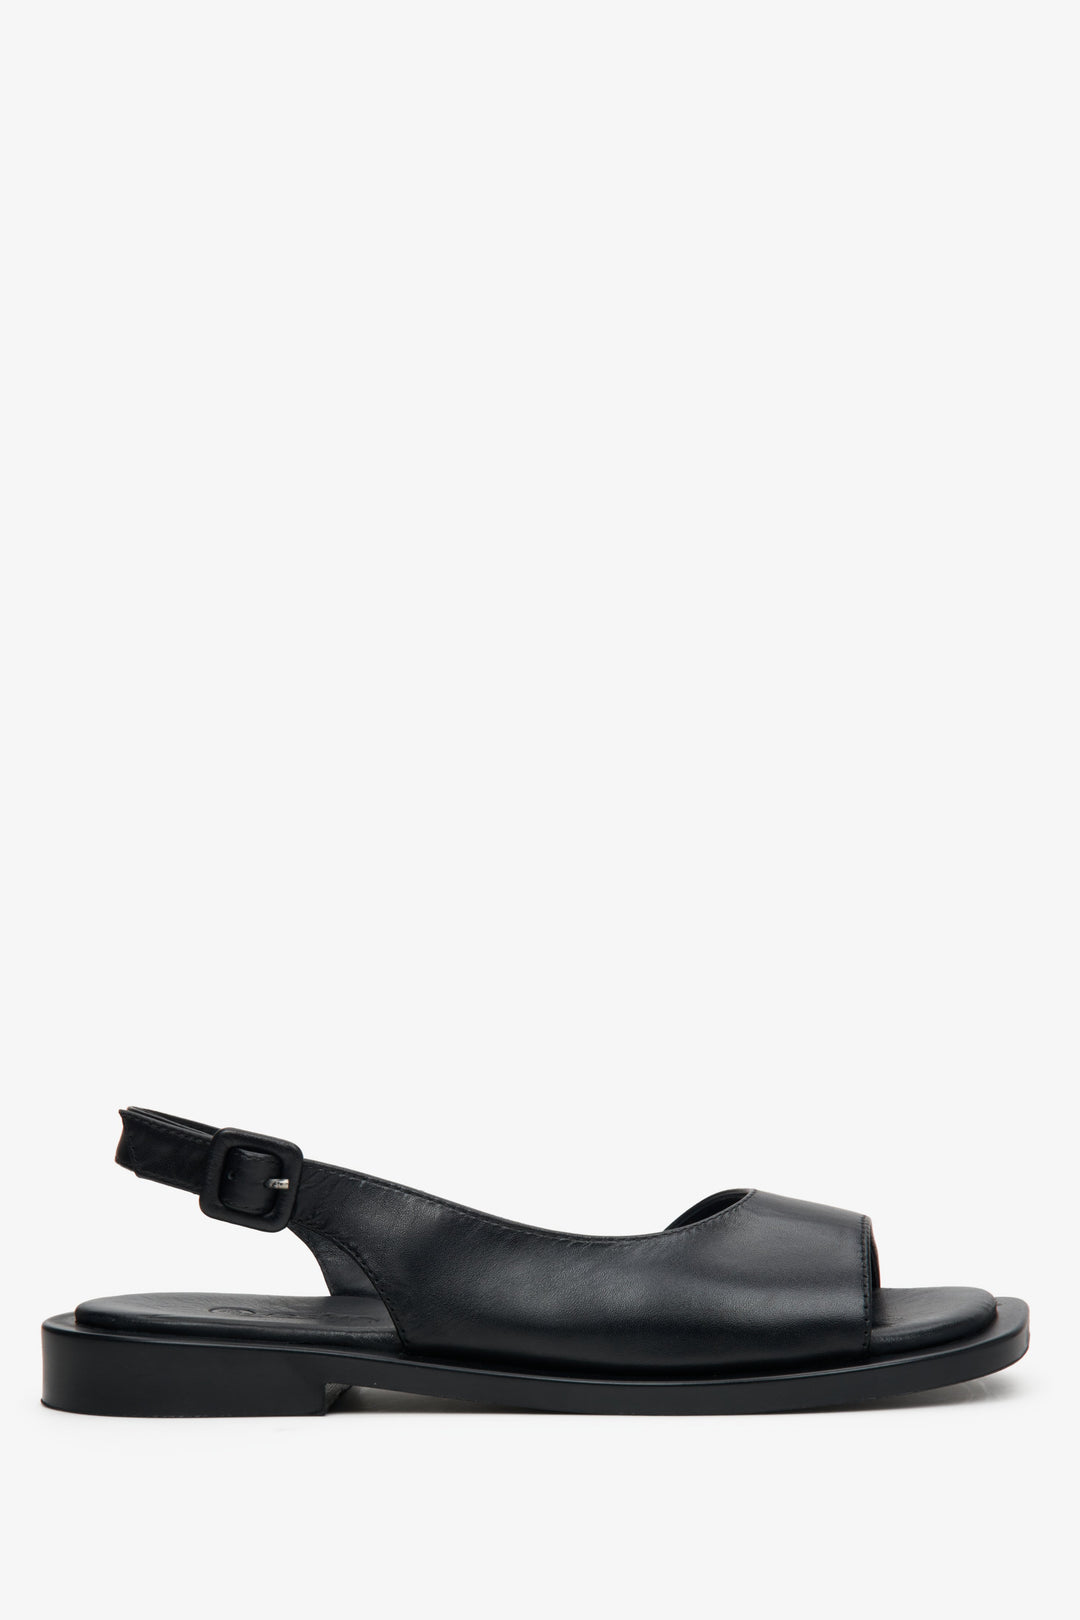 Women's black Estro leather sandals with open heel and hem.